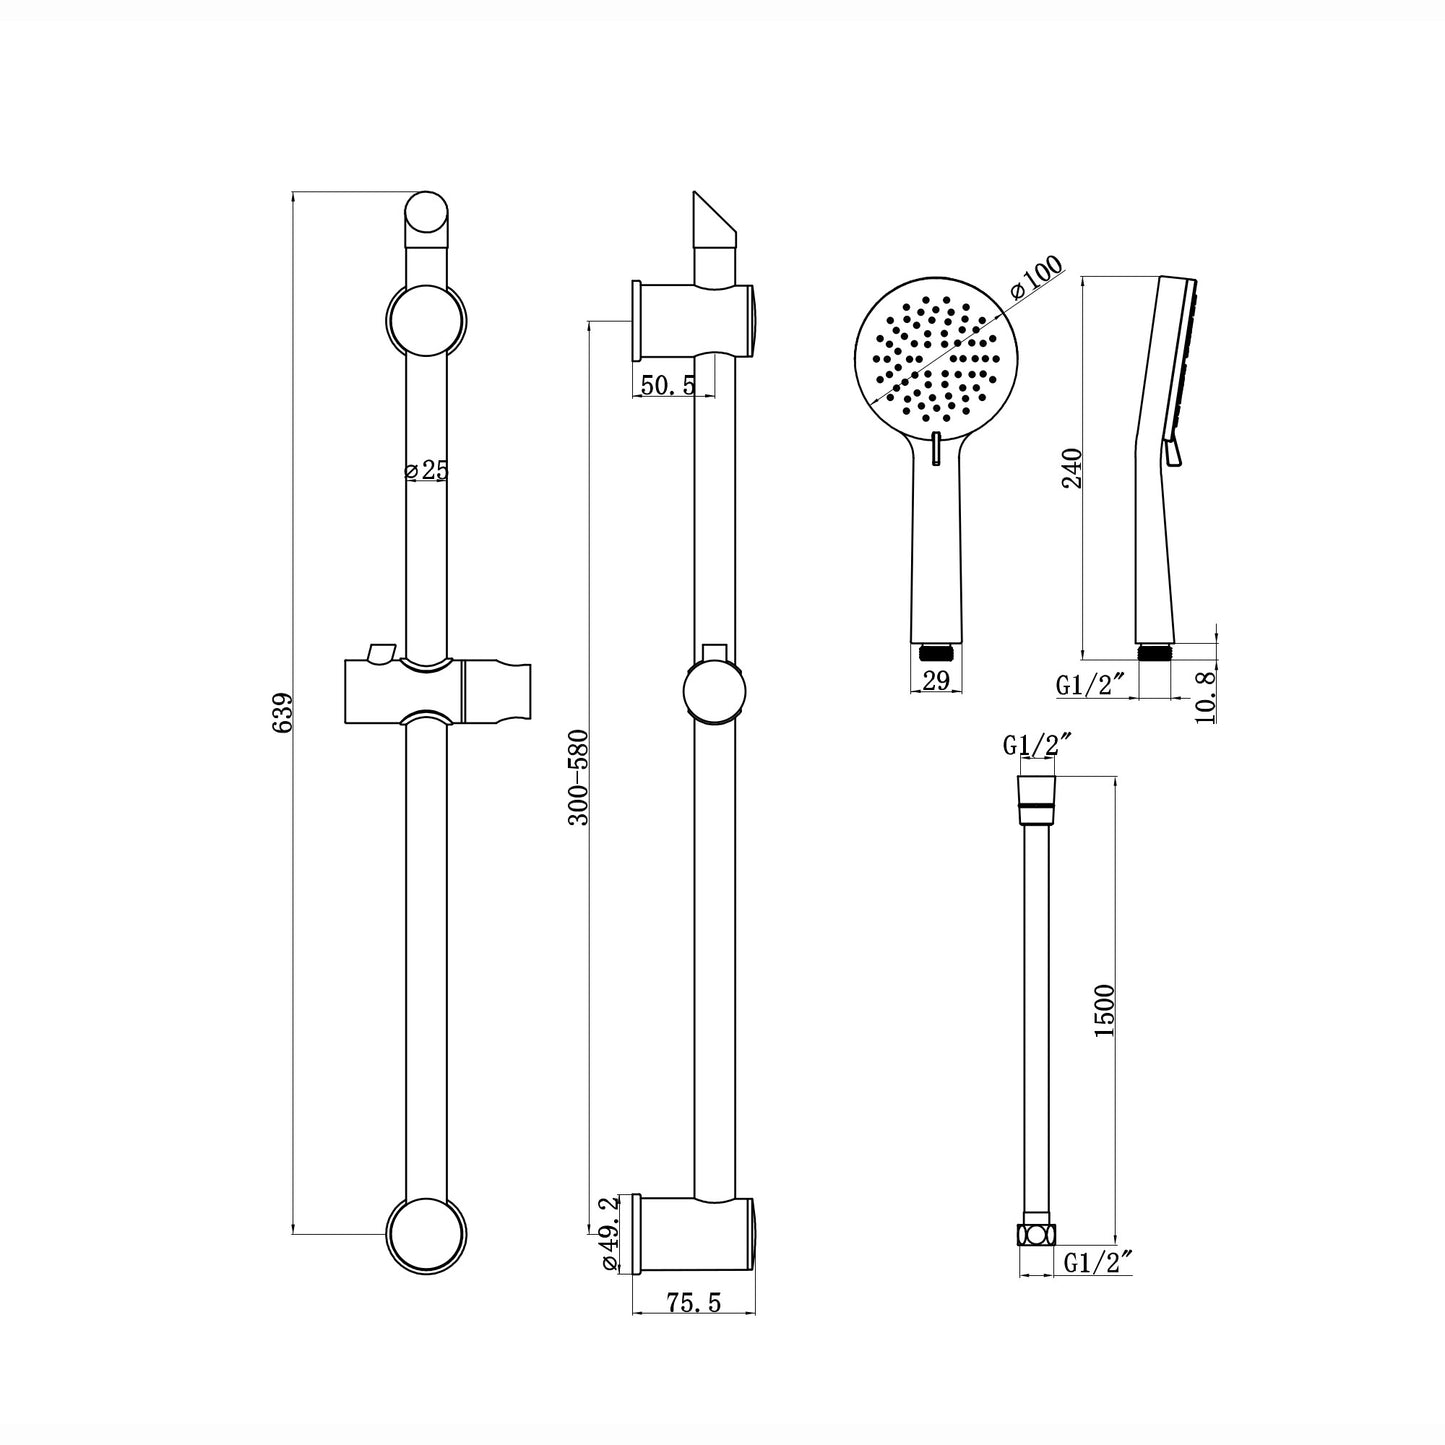 Adjustable Shower Slider Riser Rail Kit With 3 Setting Shower Head, Hose and Soap Holder - Black